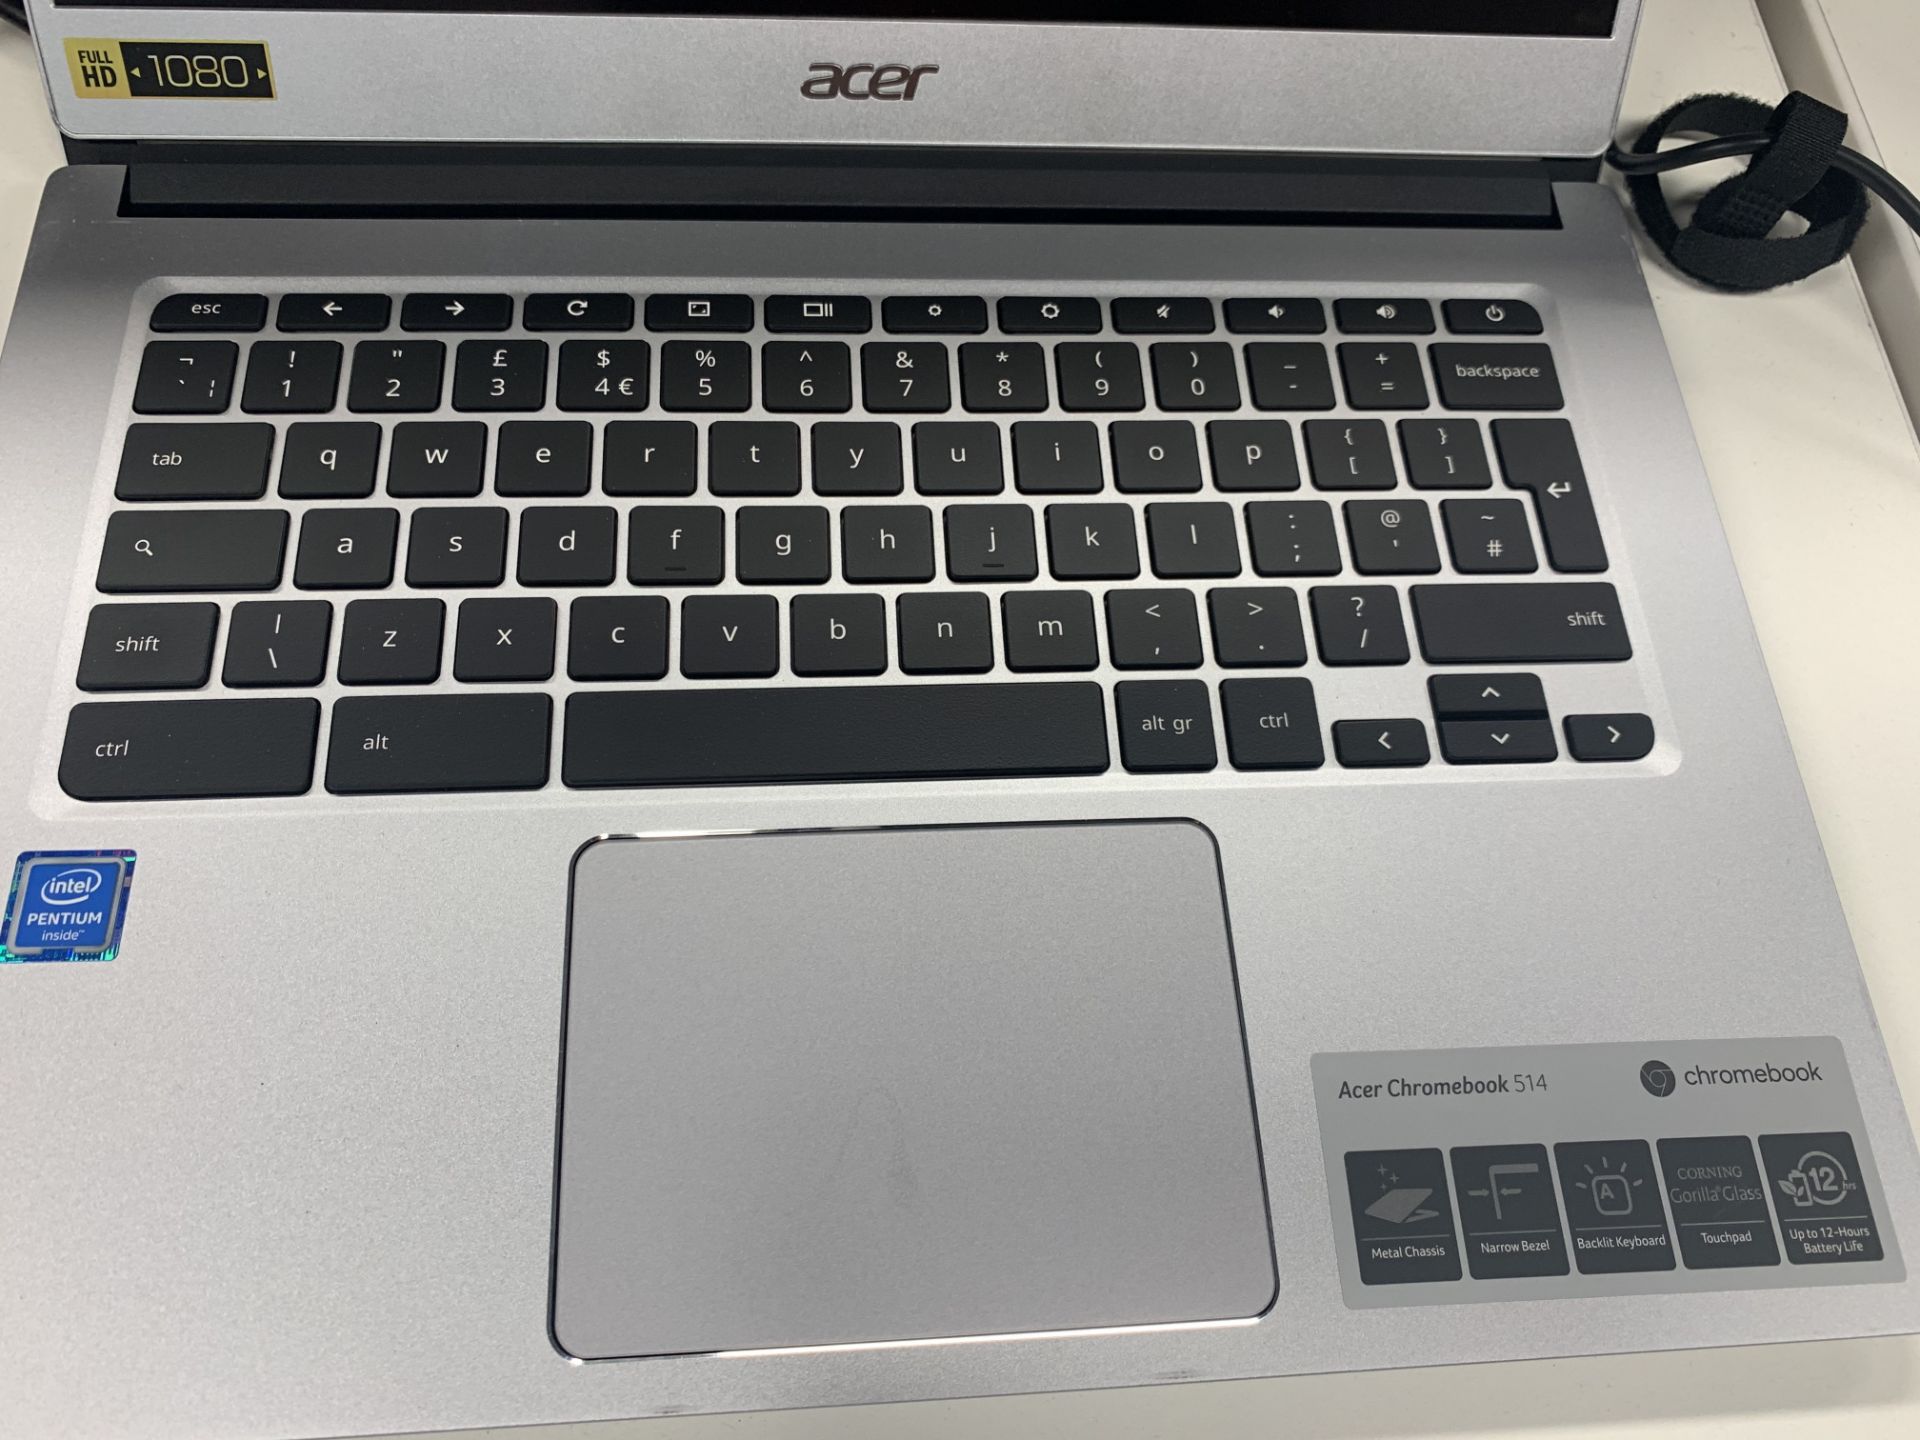 Acer Chromebook 514 - Image 2 of 4